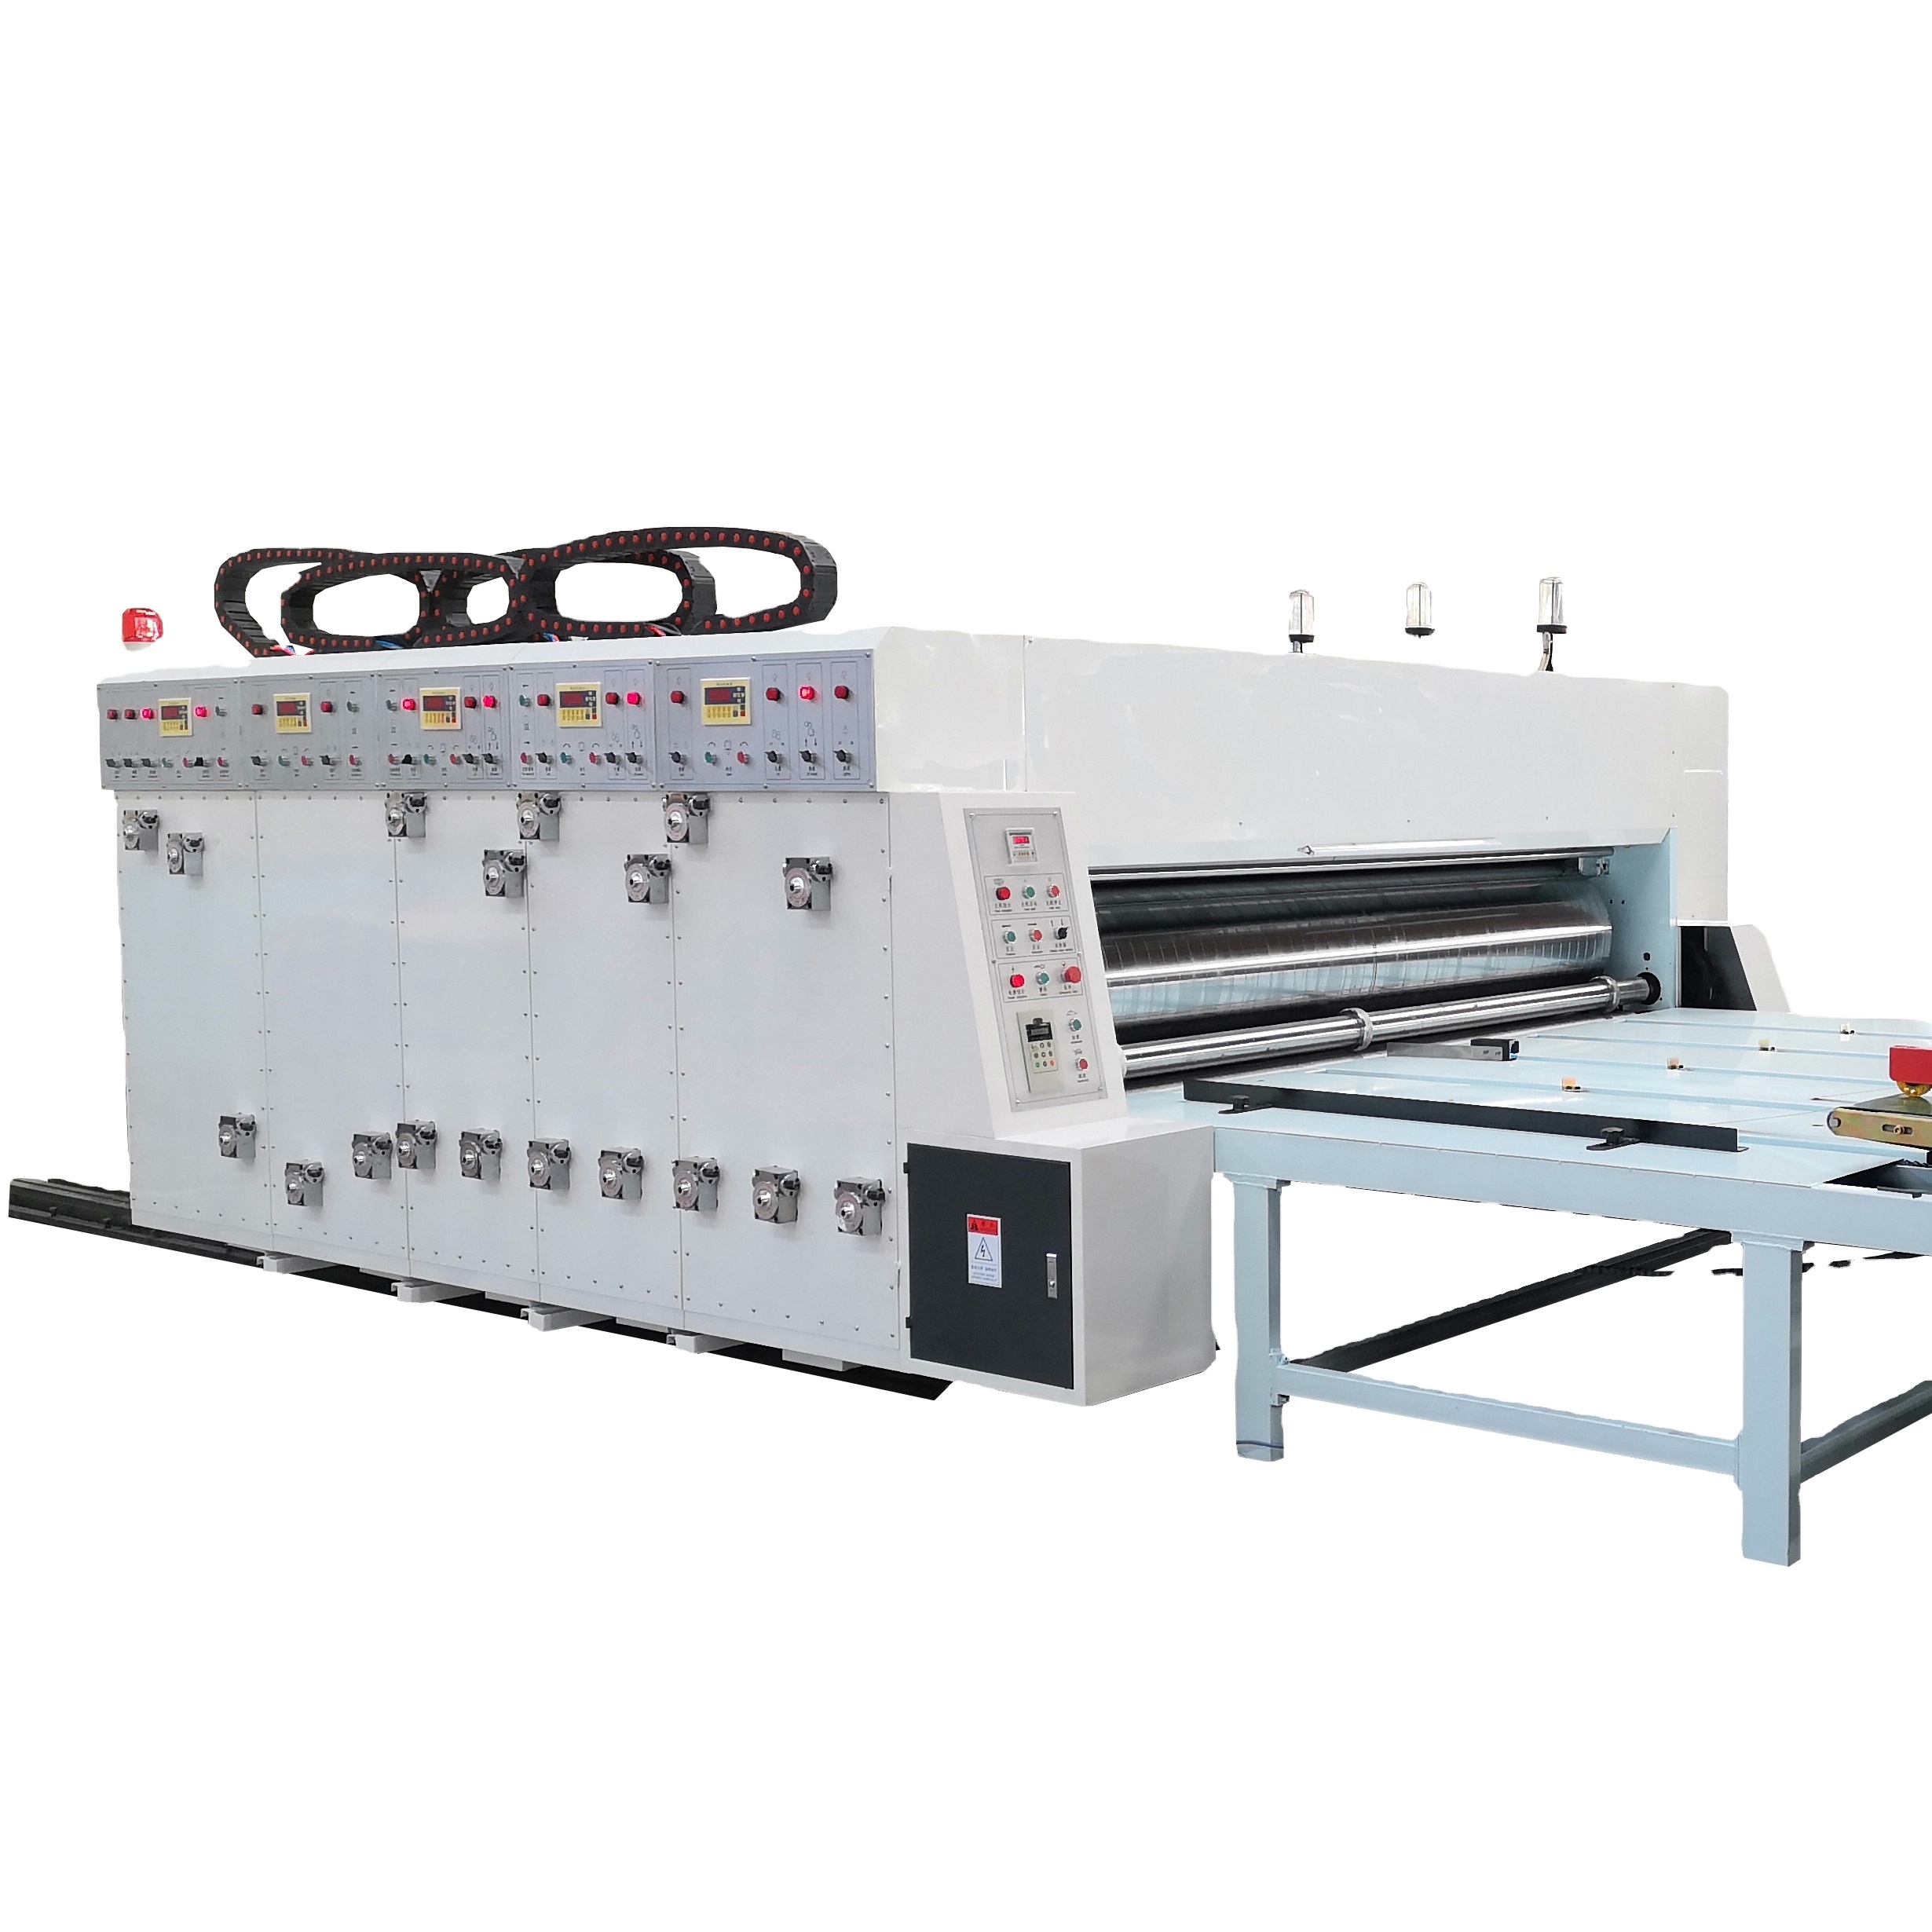 Economic pizza box carton printing slotting die-cutting machine making factory